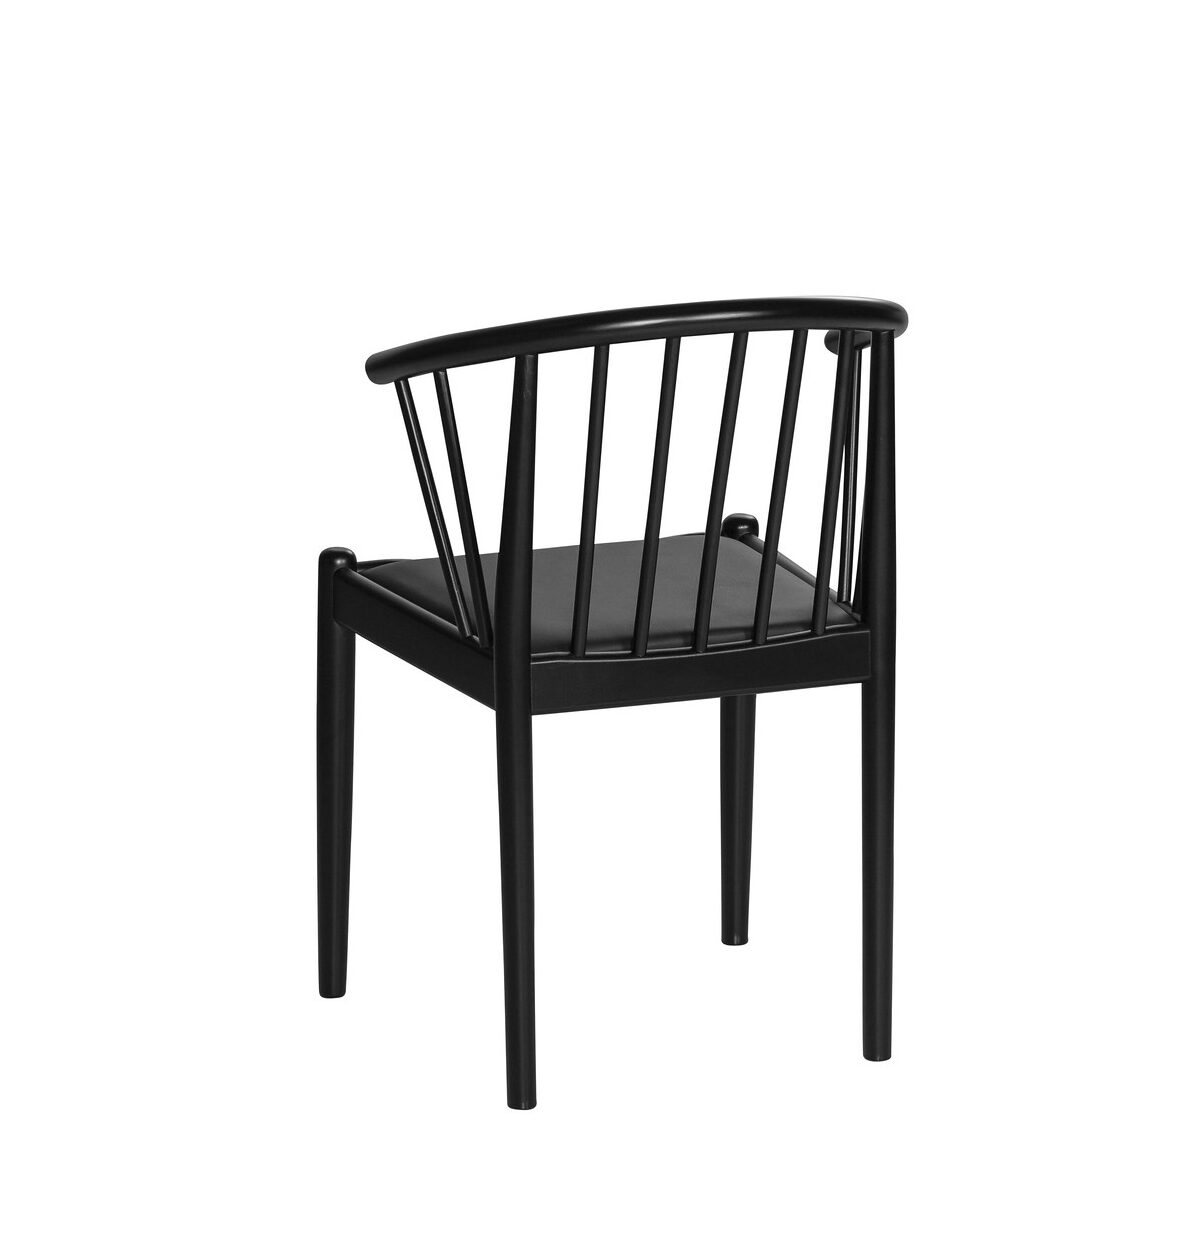 Haslev Linneberg chair